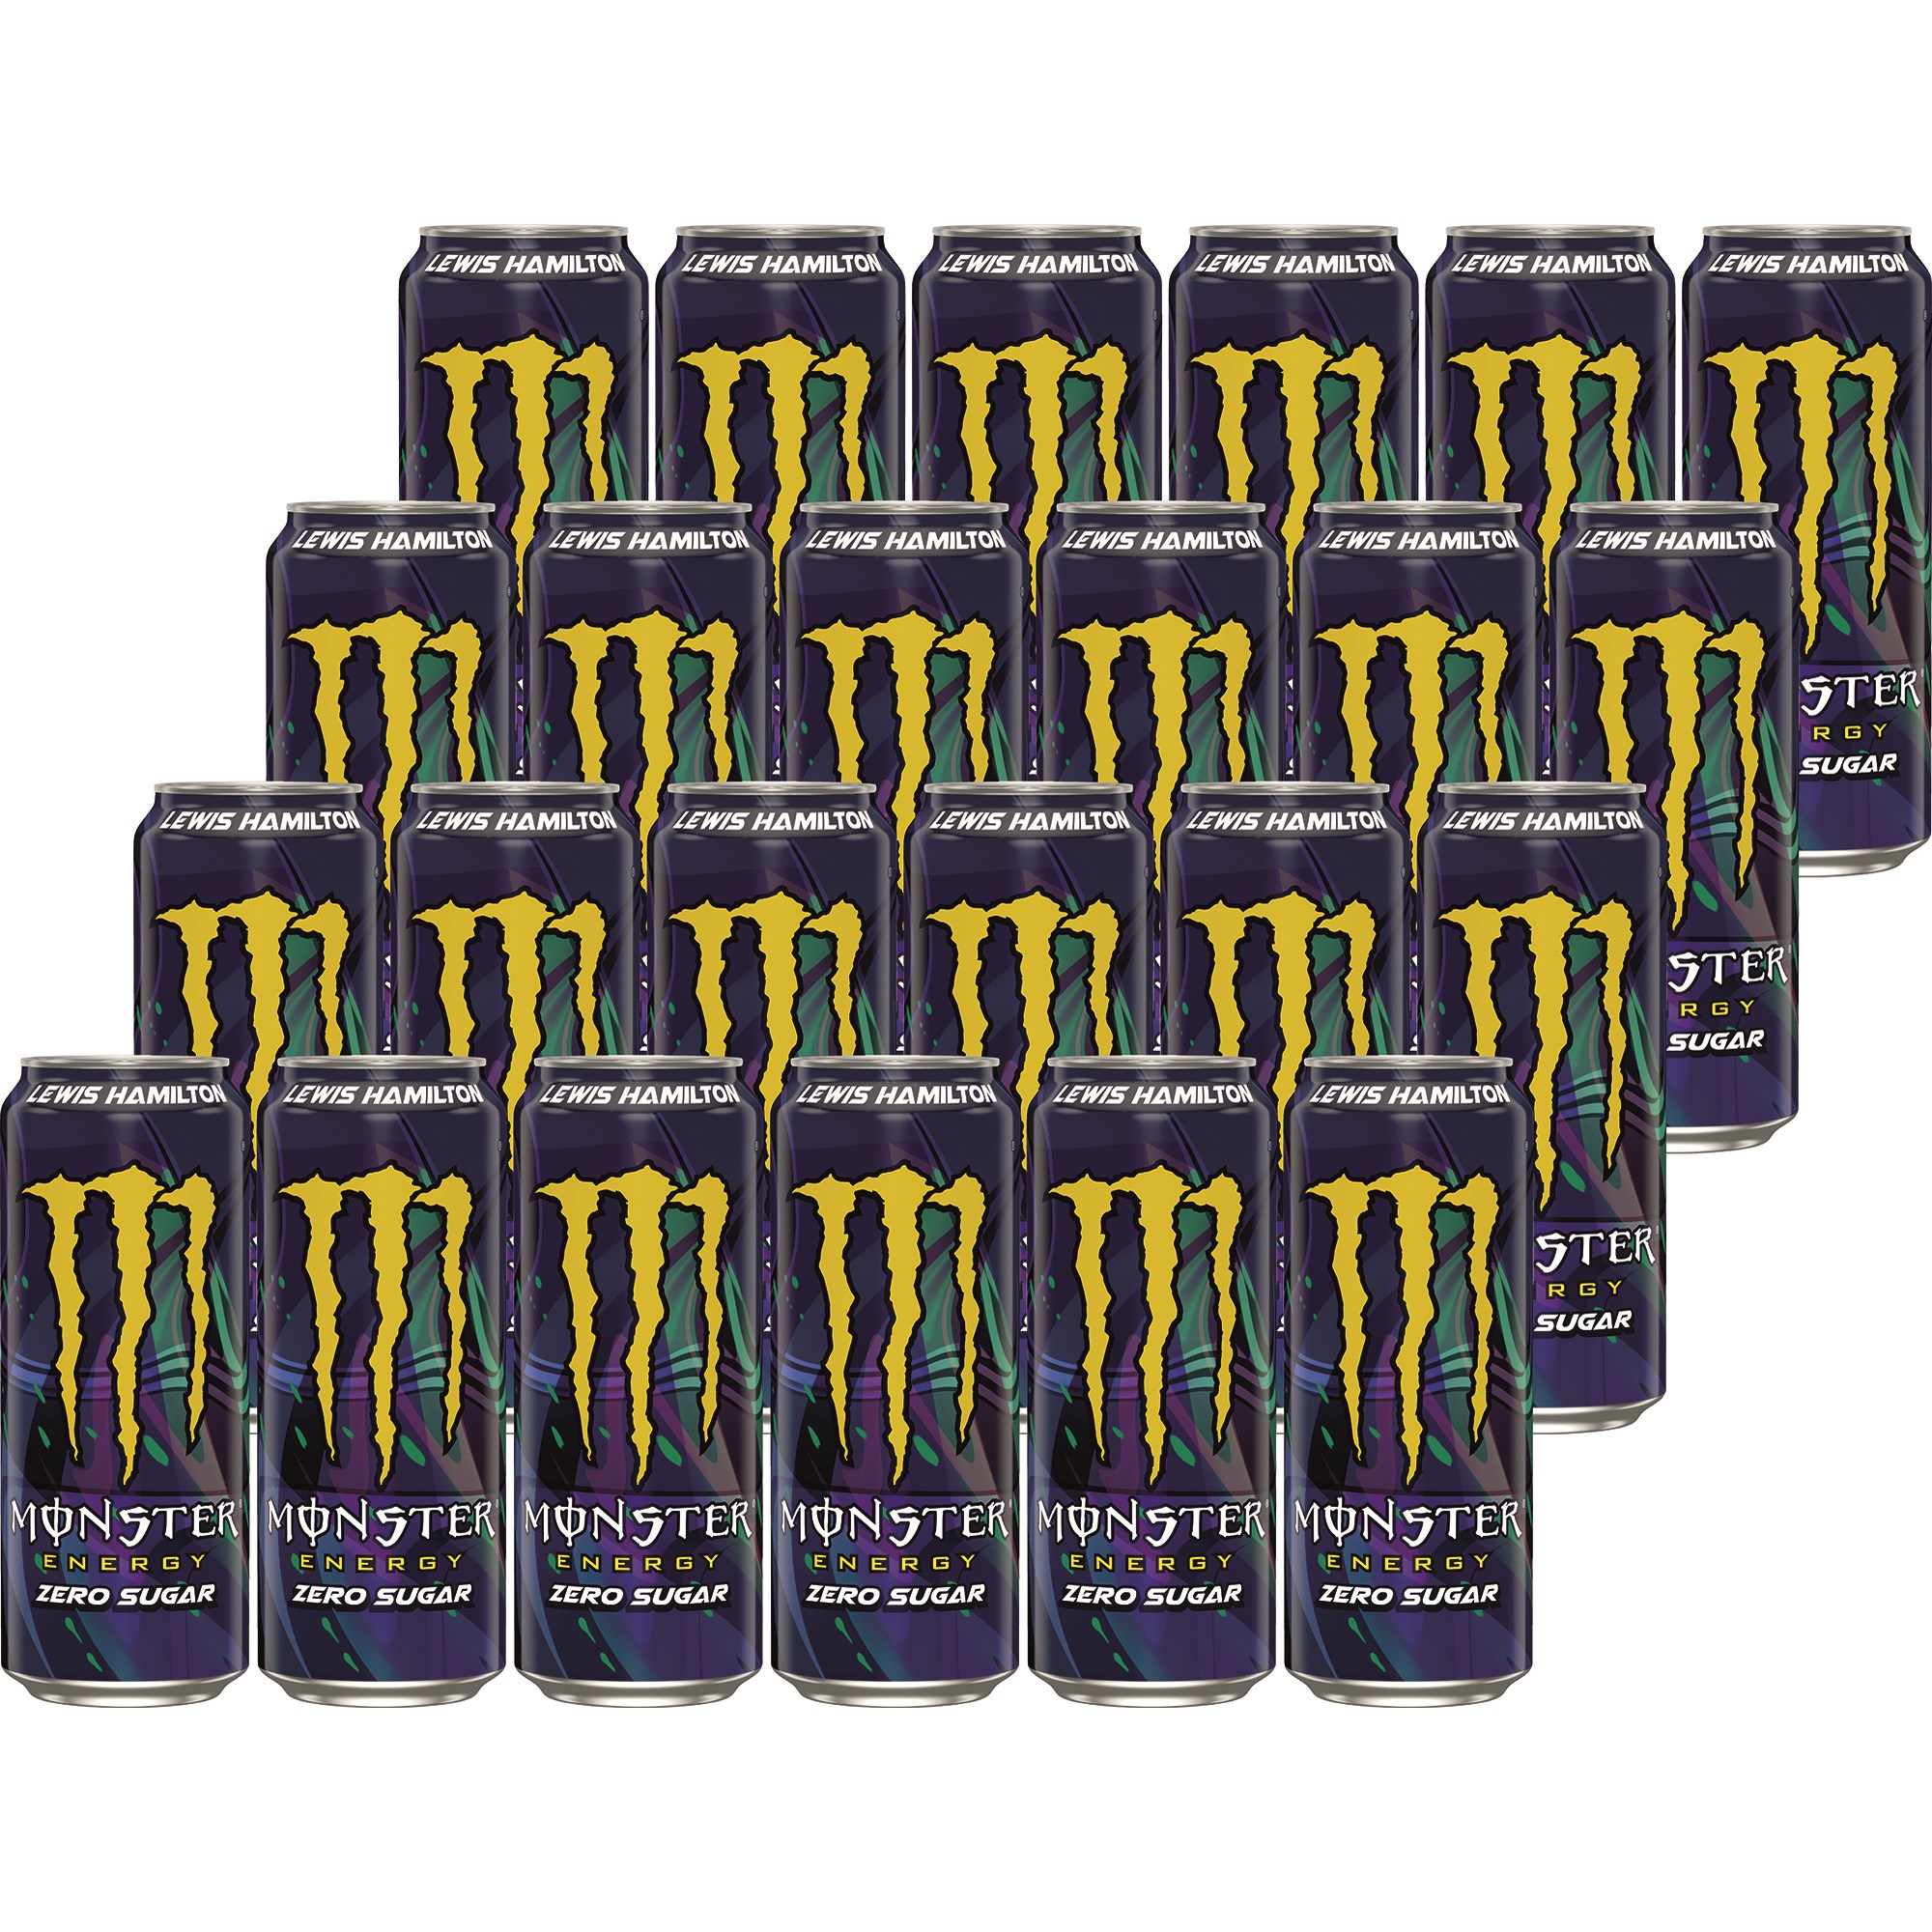 Läs mer om Monster Energy Lewis Hamilton Zero Sugar 24 x 50cl